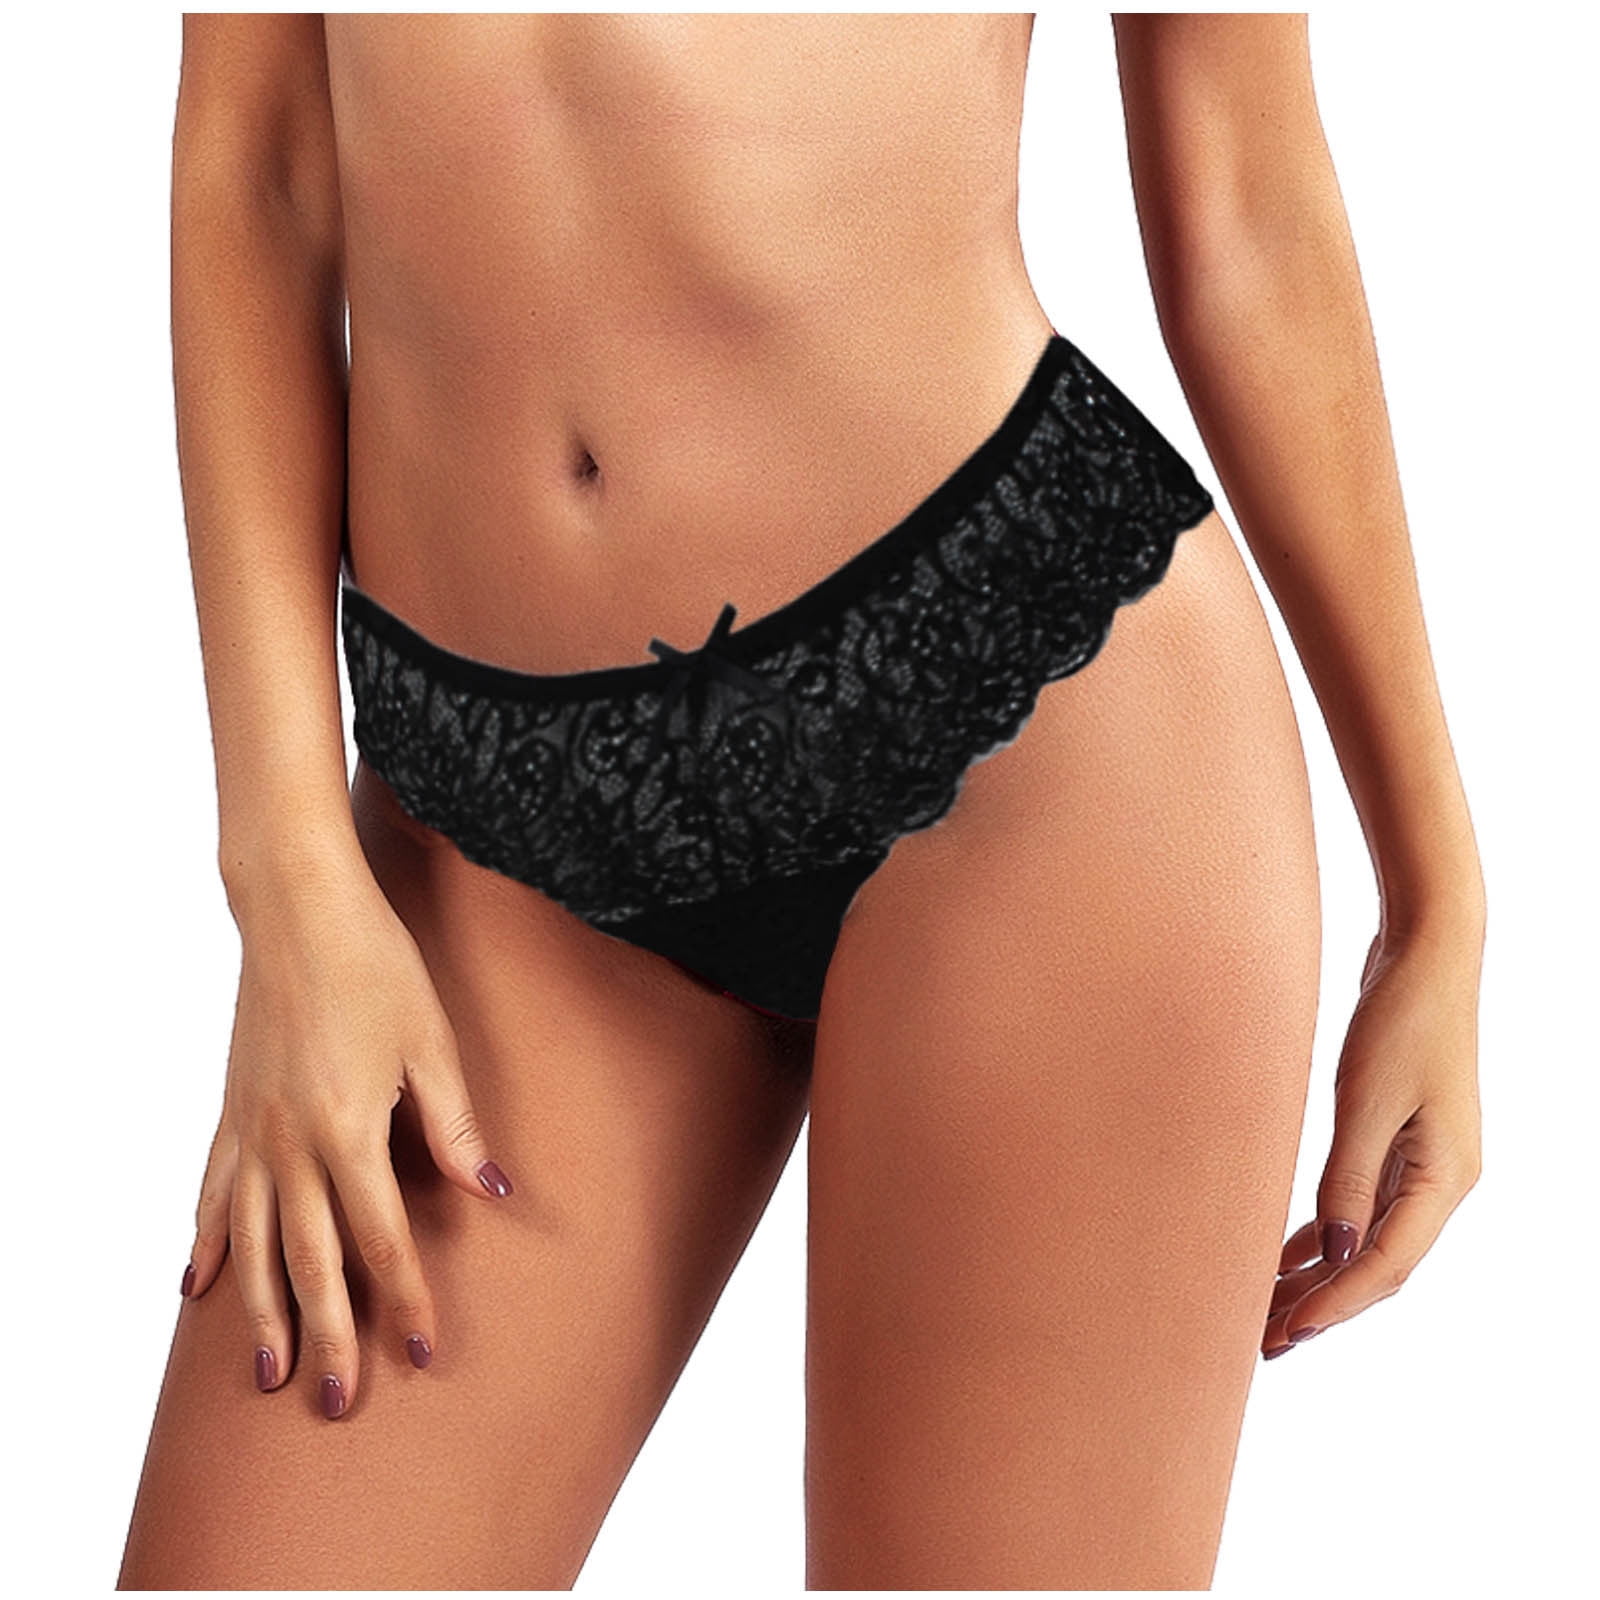 Tawop Edible Underwear for Women Women'S Traceless Briefs Medium Waist  Sports Elastic Underwear Briefs Under Outfit Bras for Women 